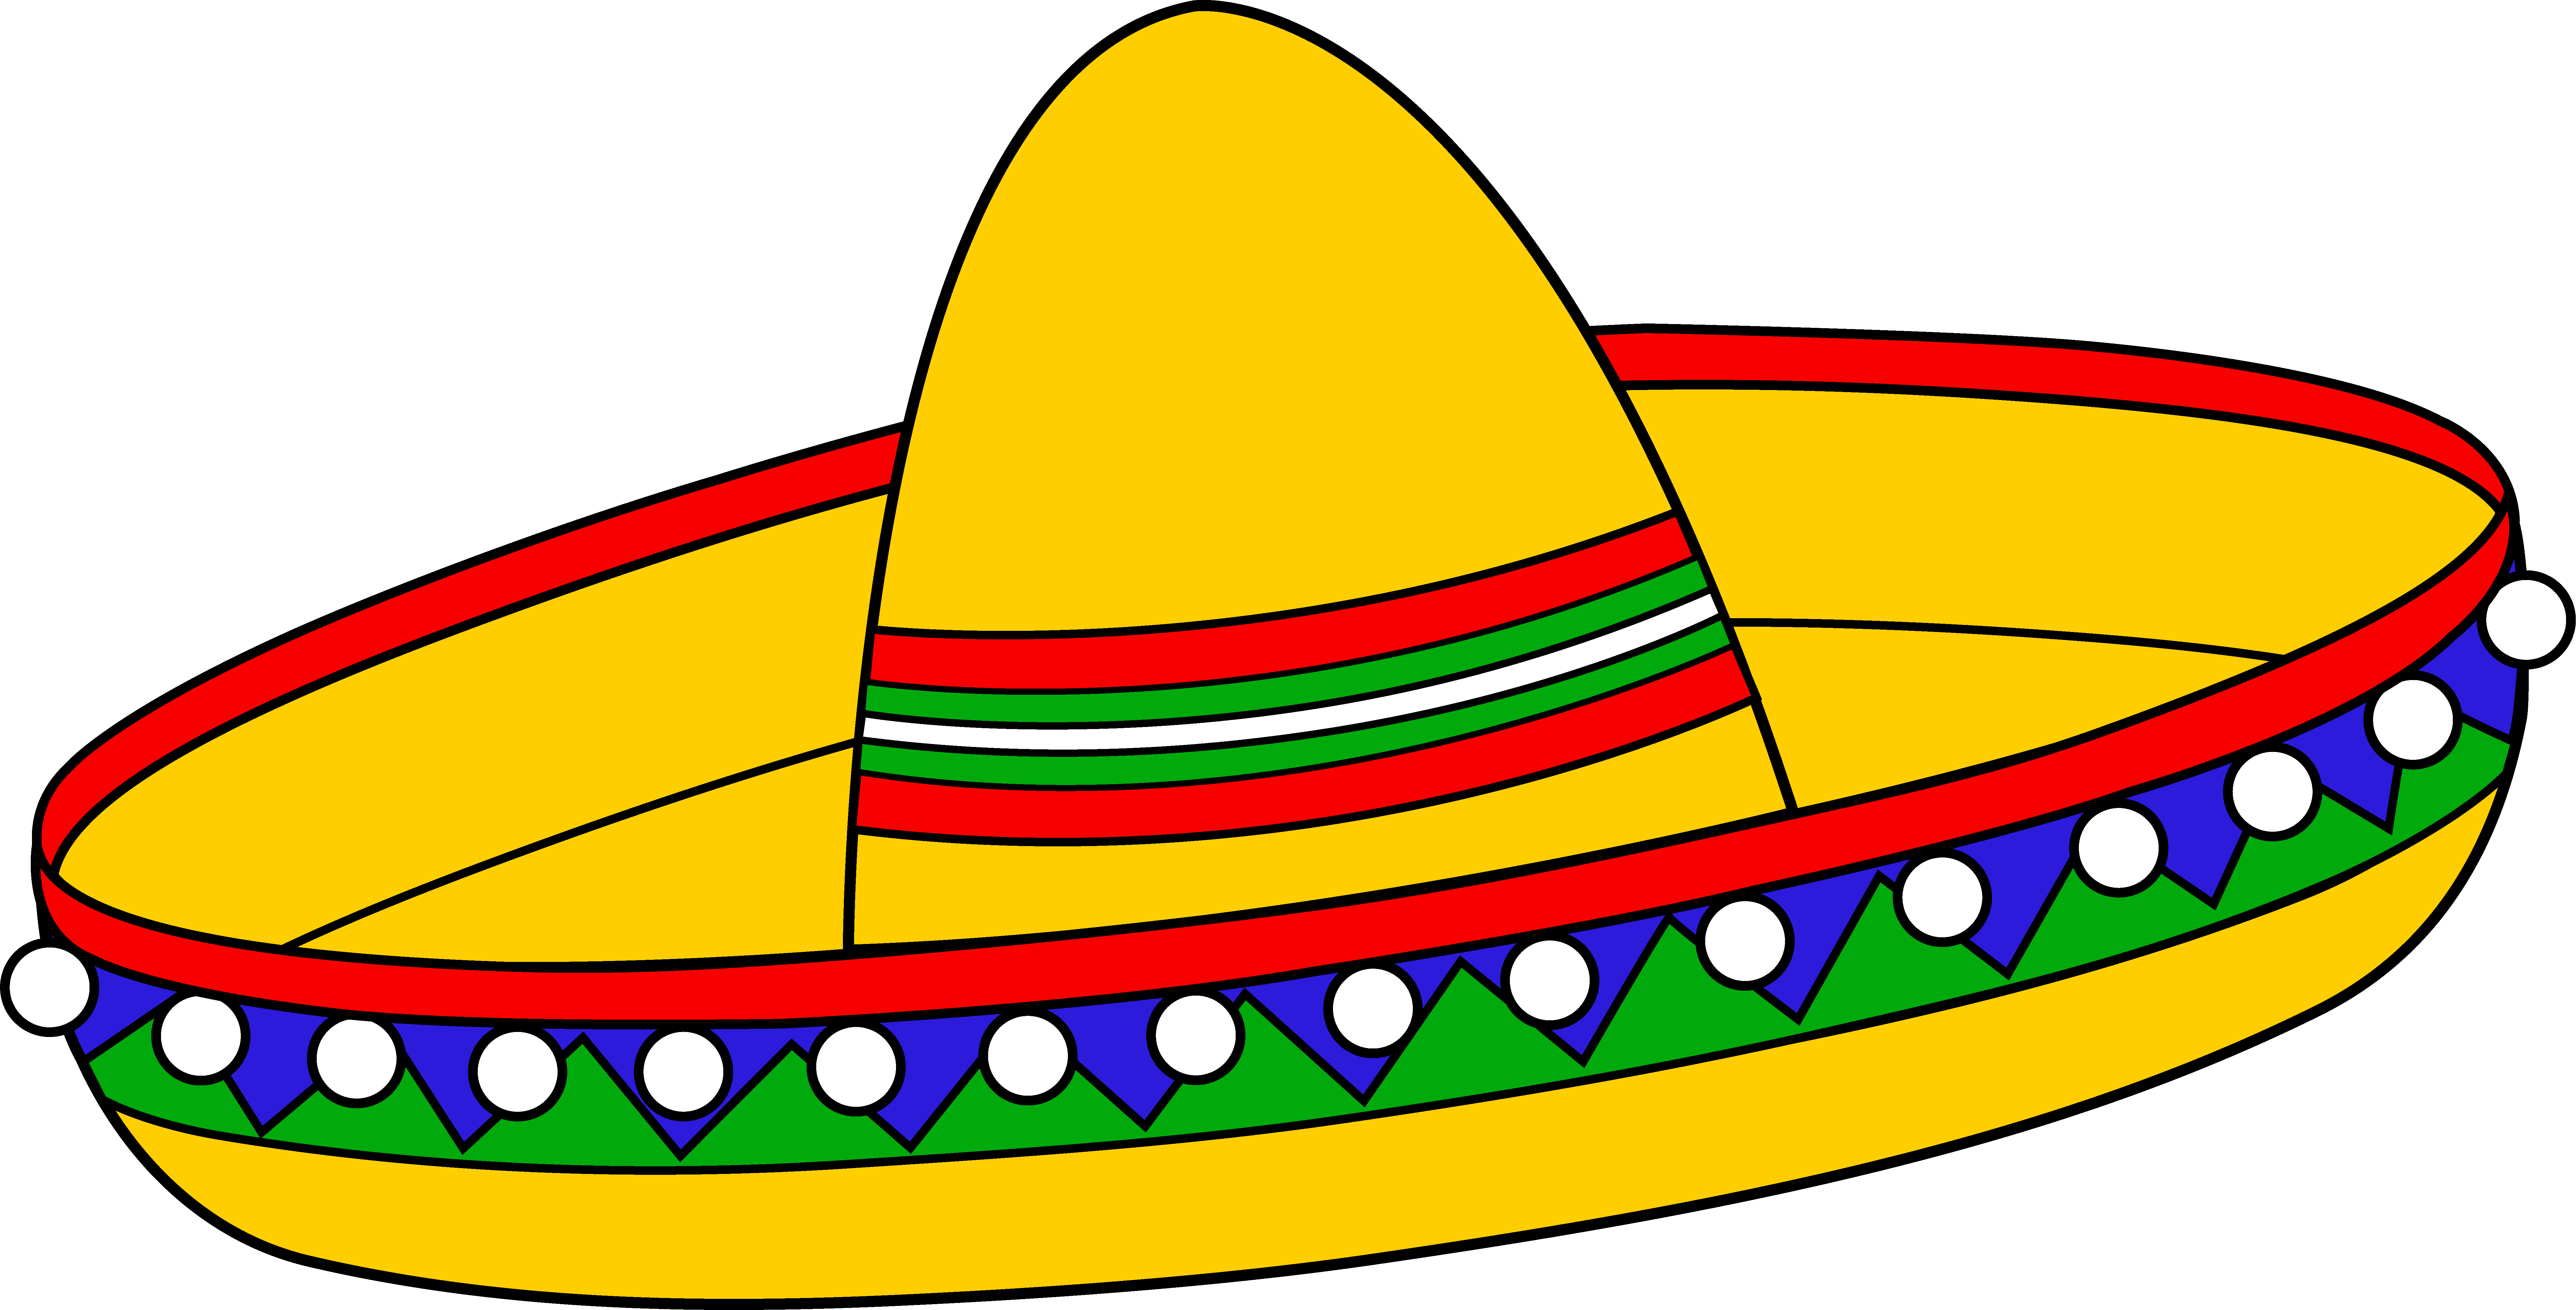 Colorful mexican sombrero hat. Mountain clipart boho